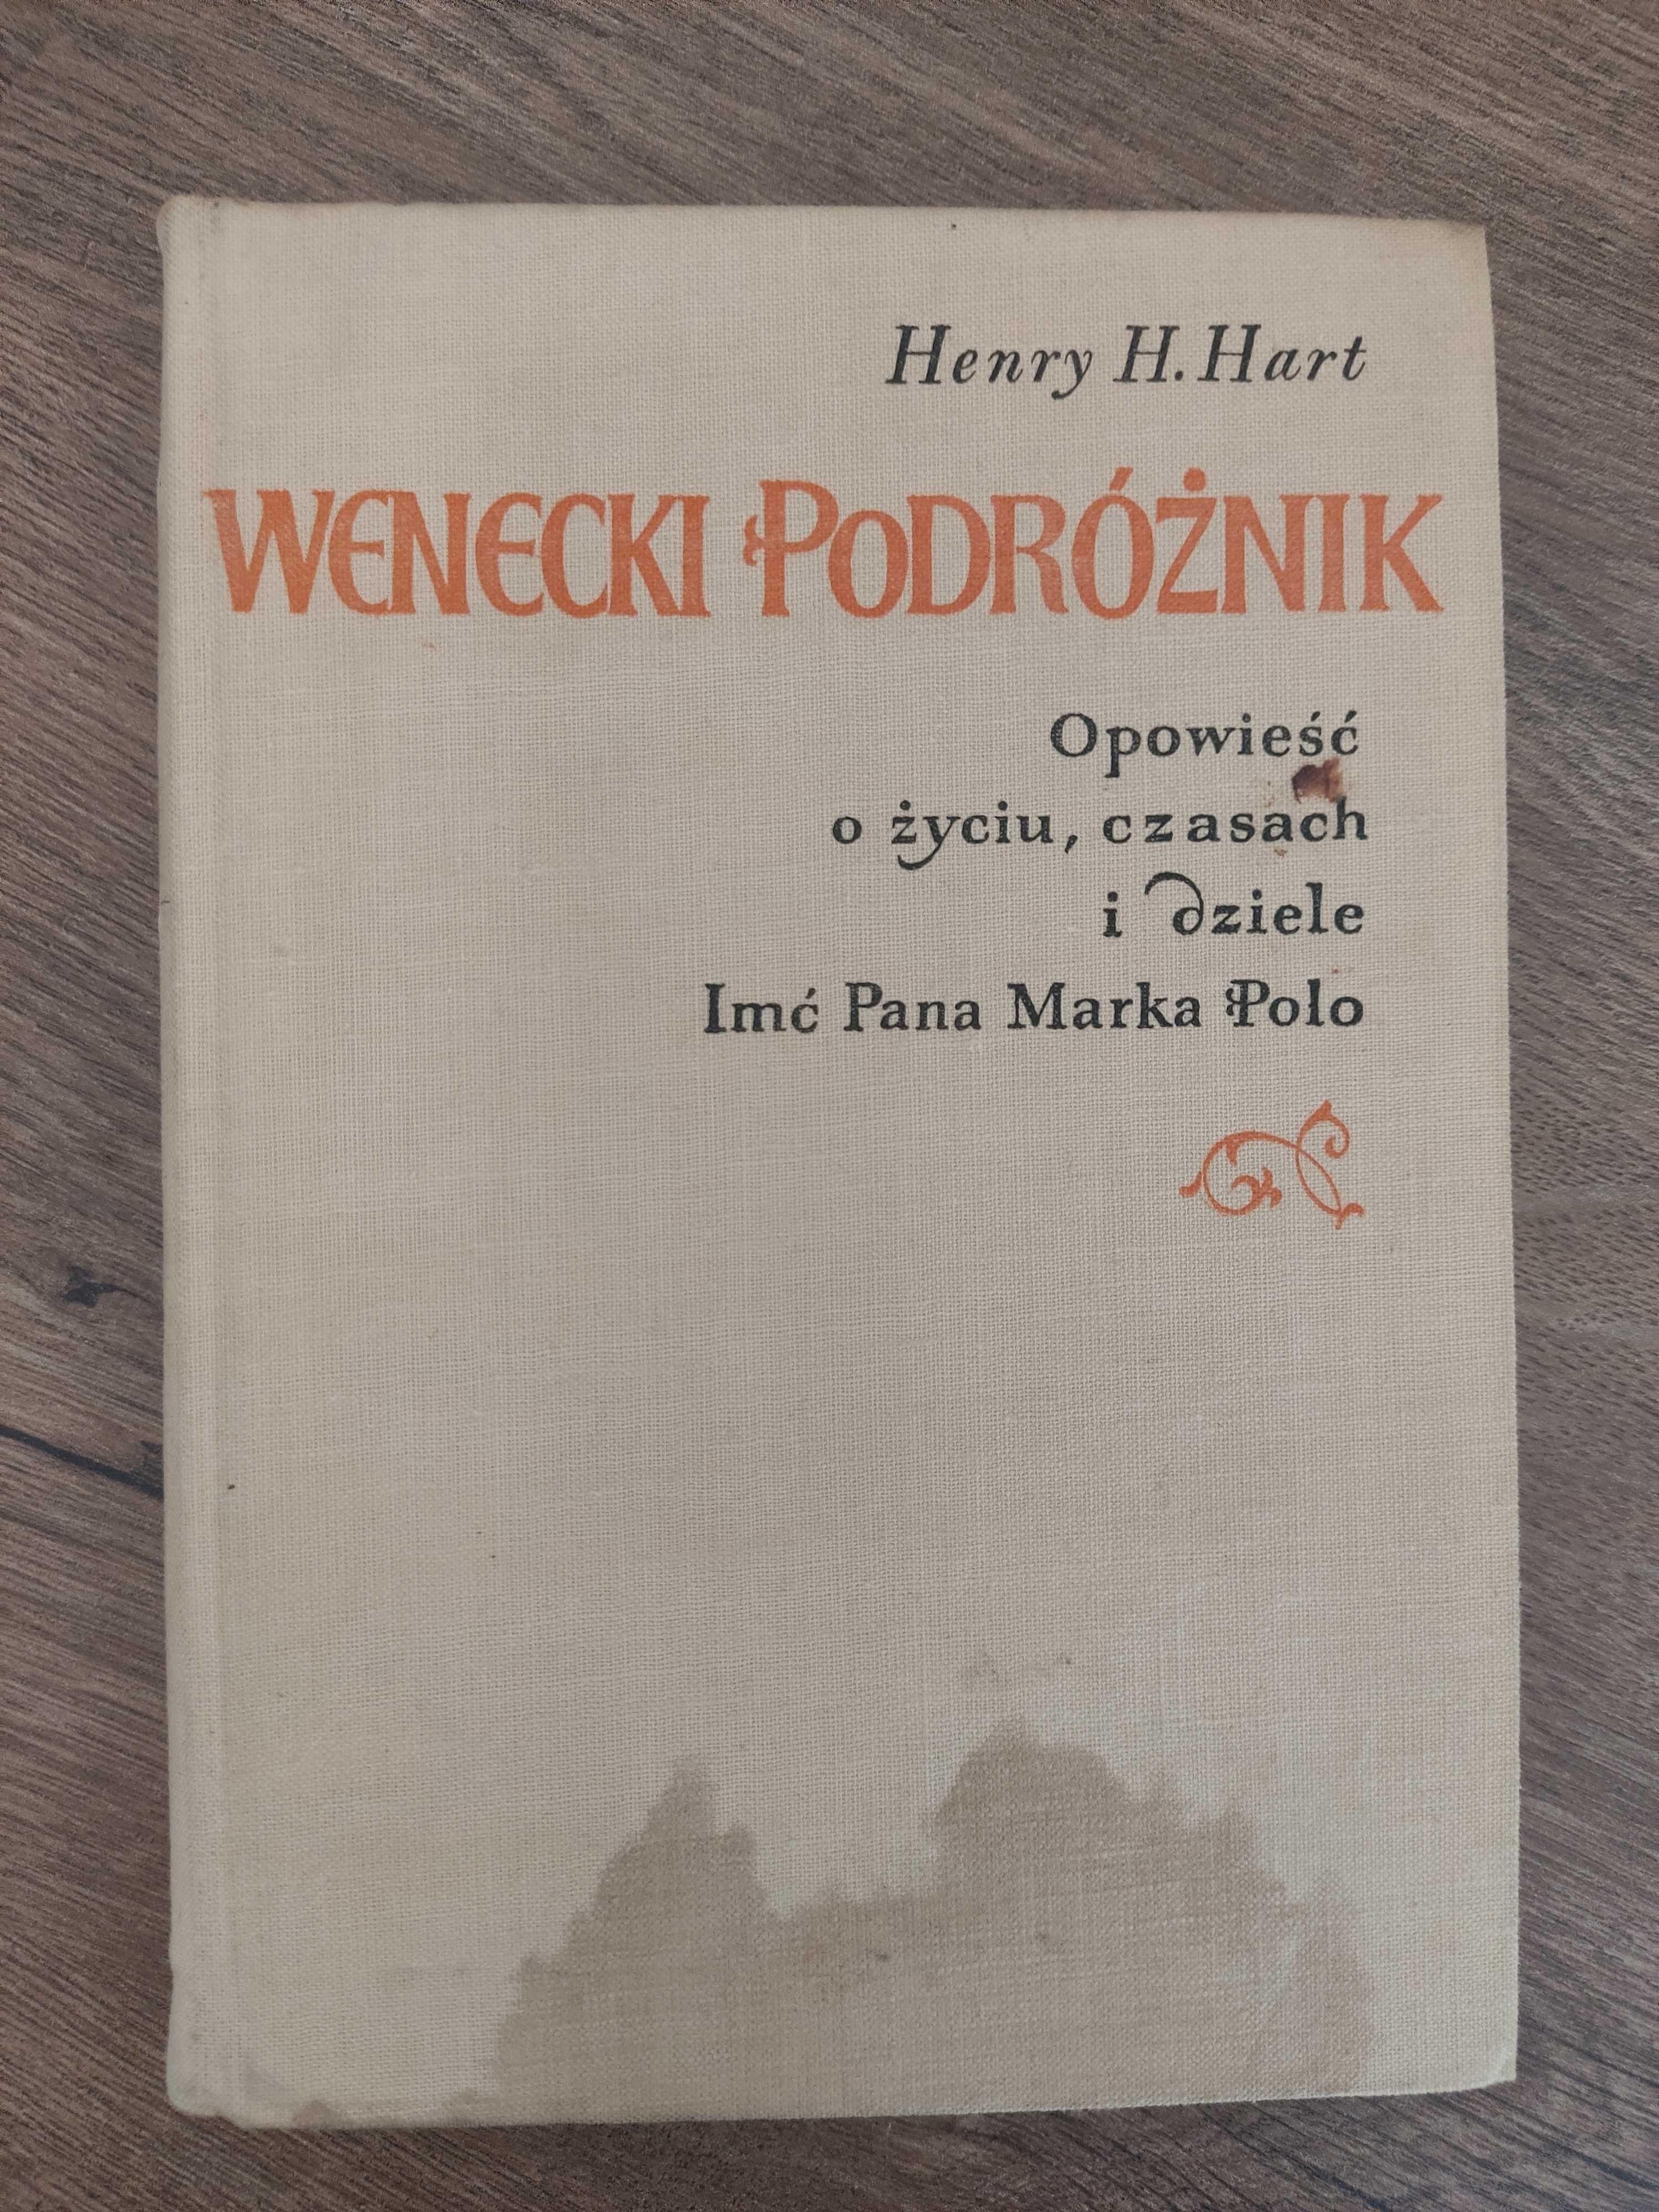 Wenecki Podróżnik, Henry H. Hart, 1963